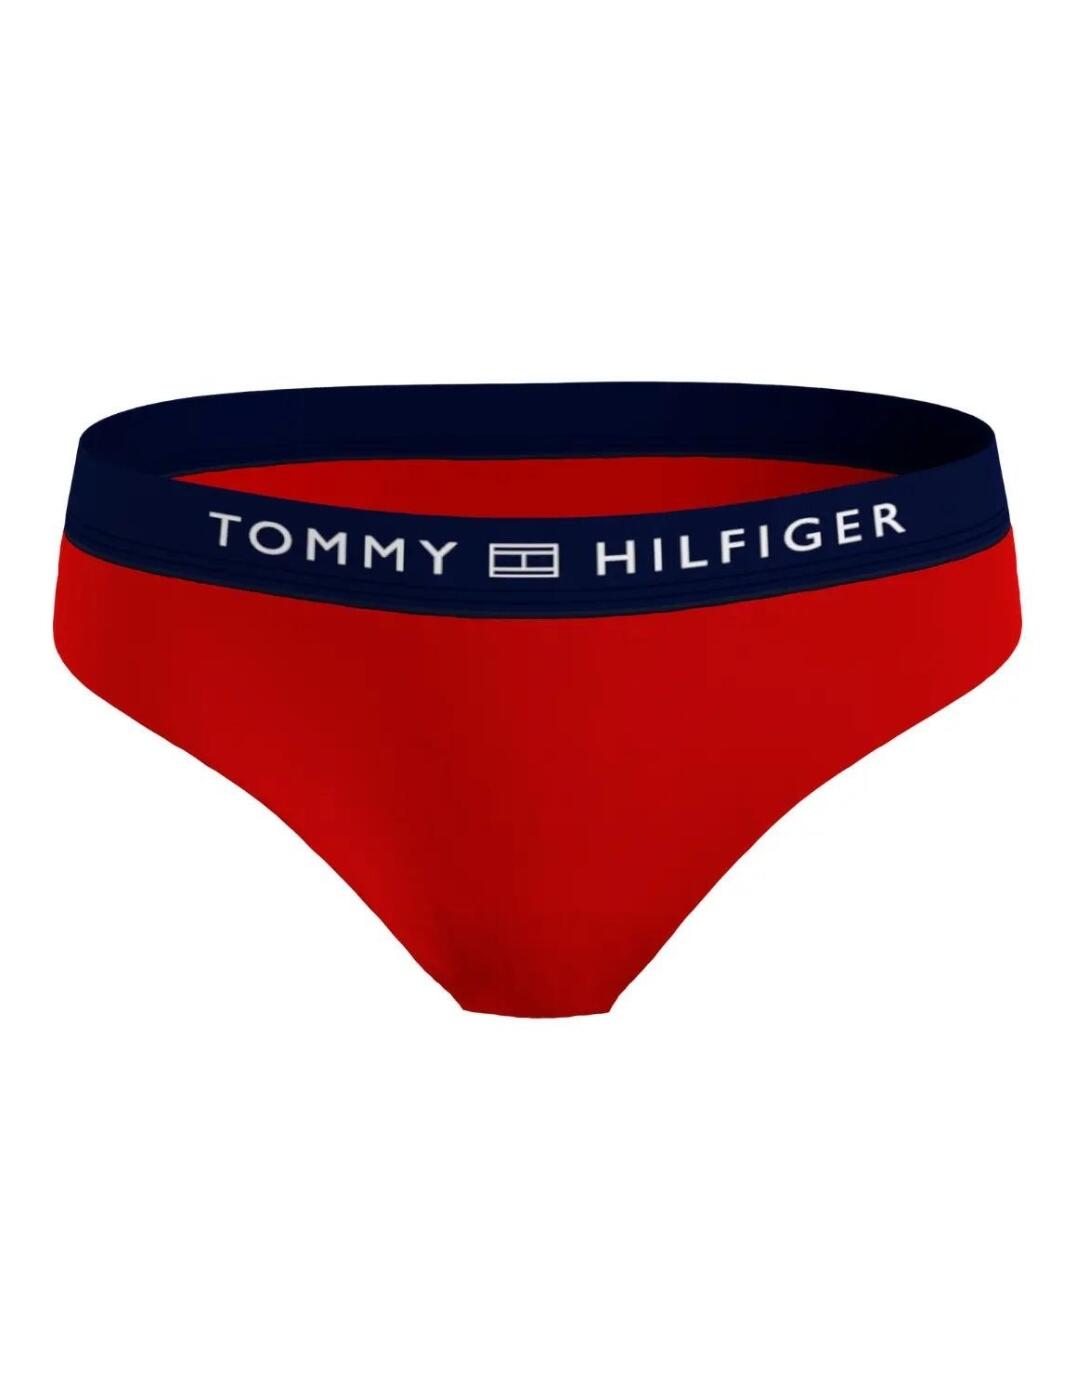 Tommy Hilfiger Bikini Brief - Belle Lingerie